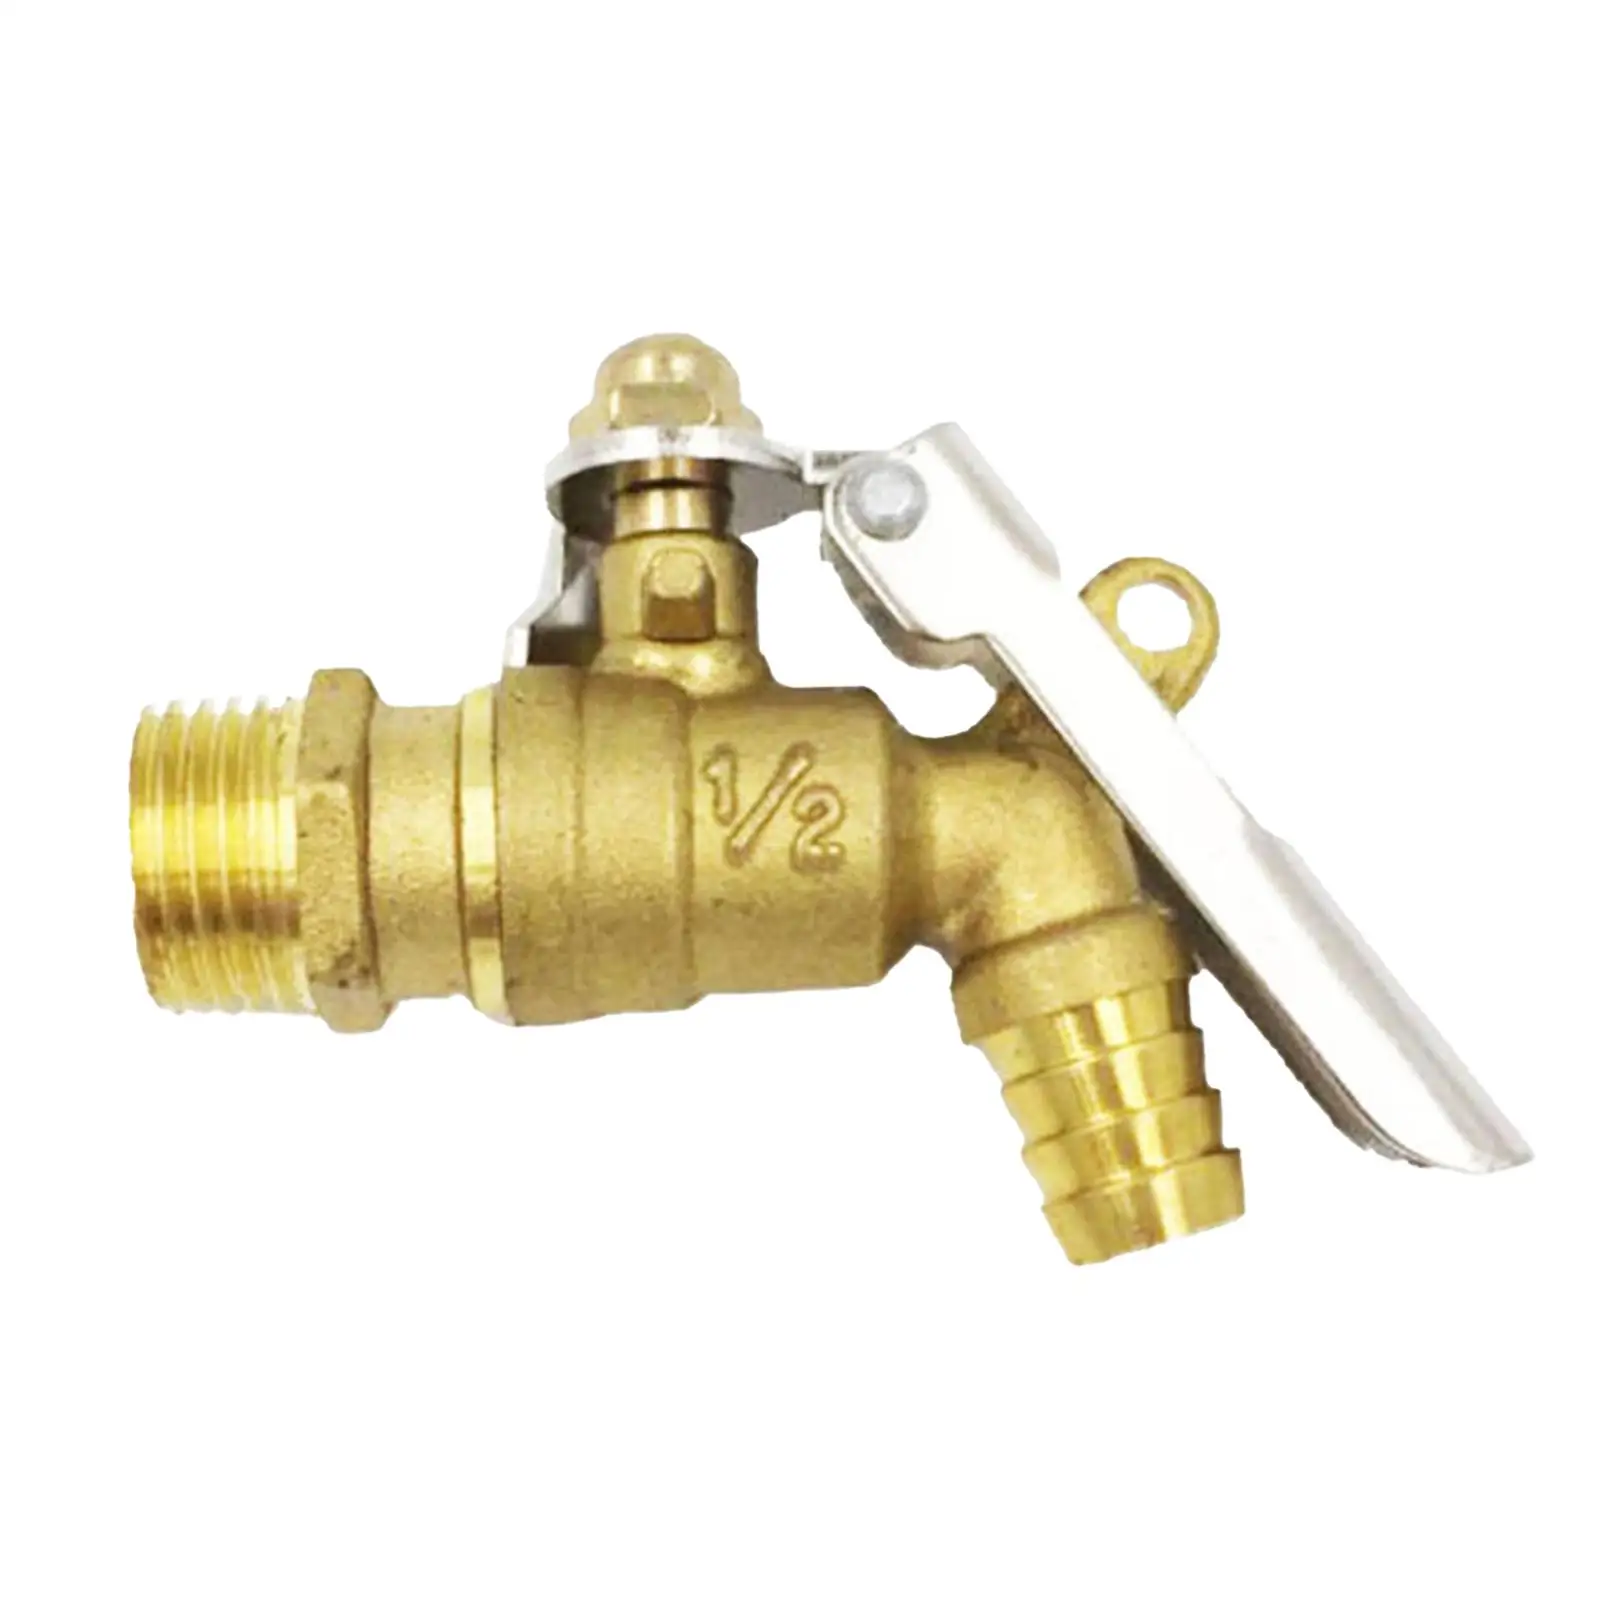 

1/2 inch Lockable Brass Faucet Replacement Outdoor Brass Faucet Outdoor Water Tap for Outside Home Public Places Garden Workshop